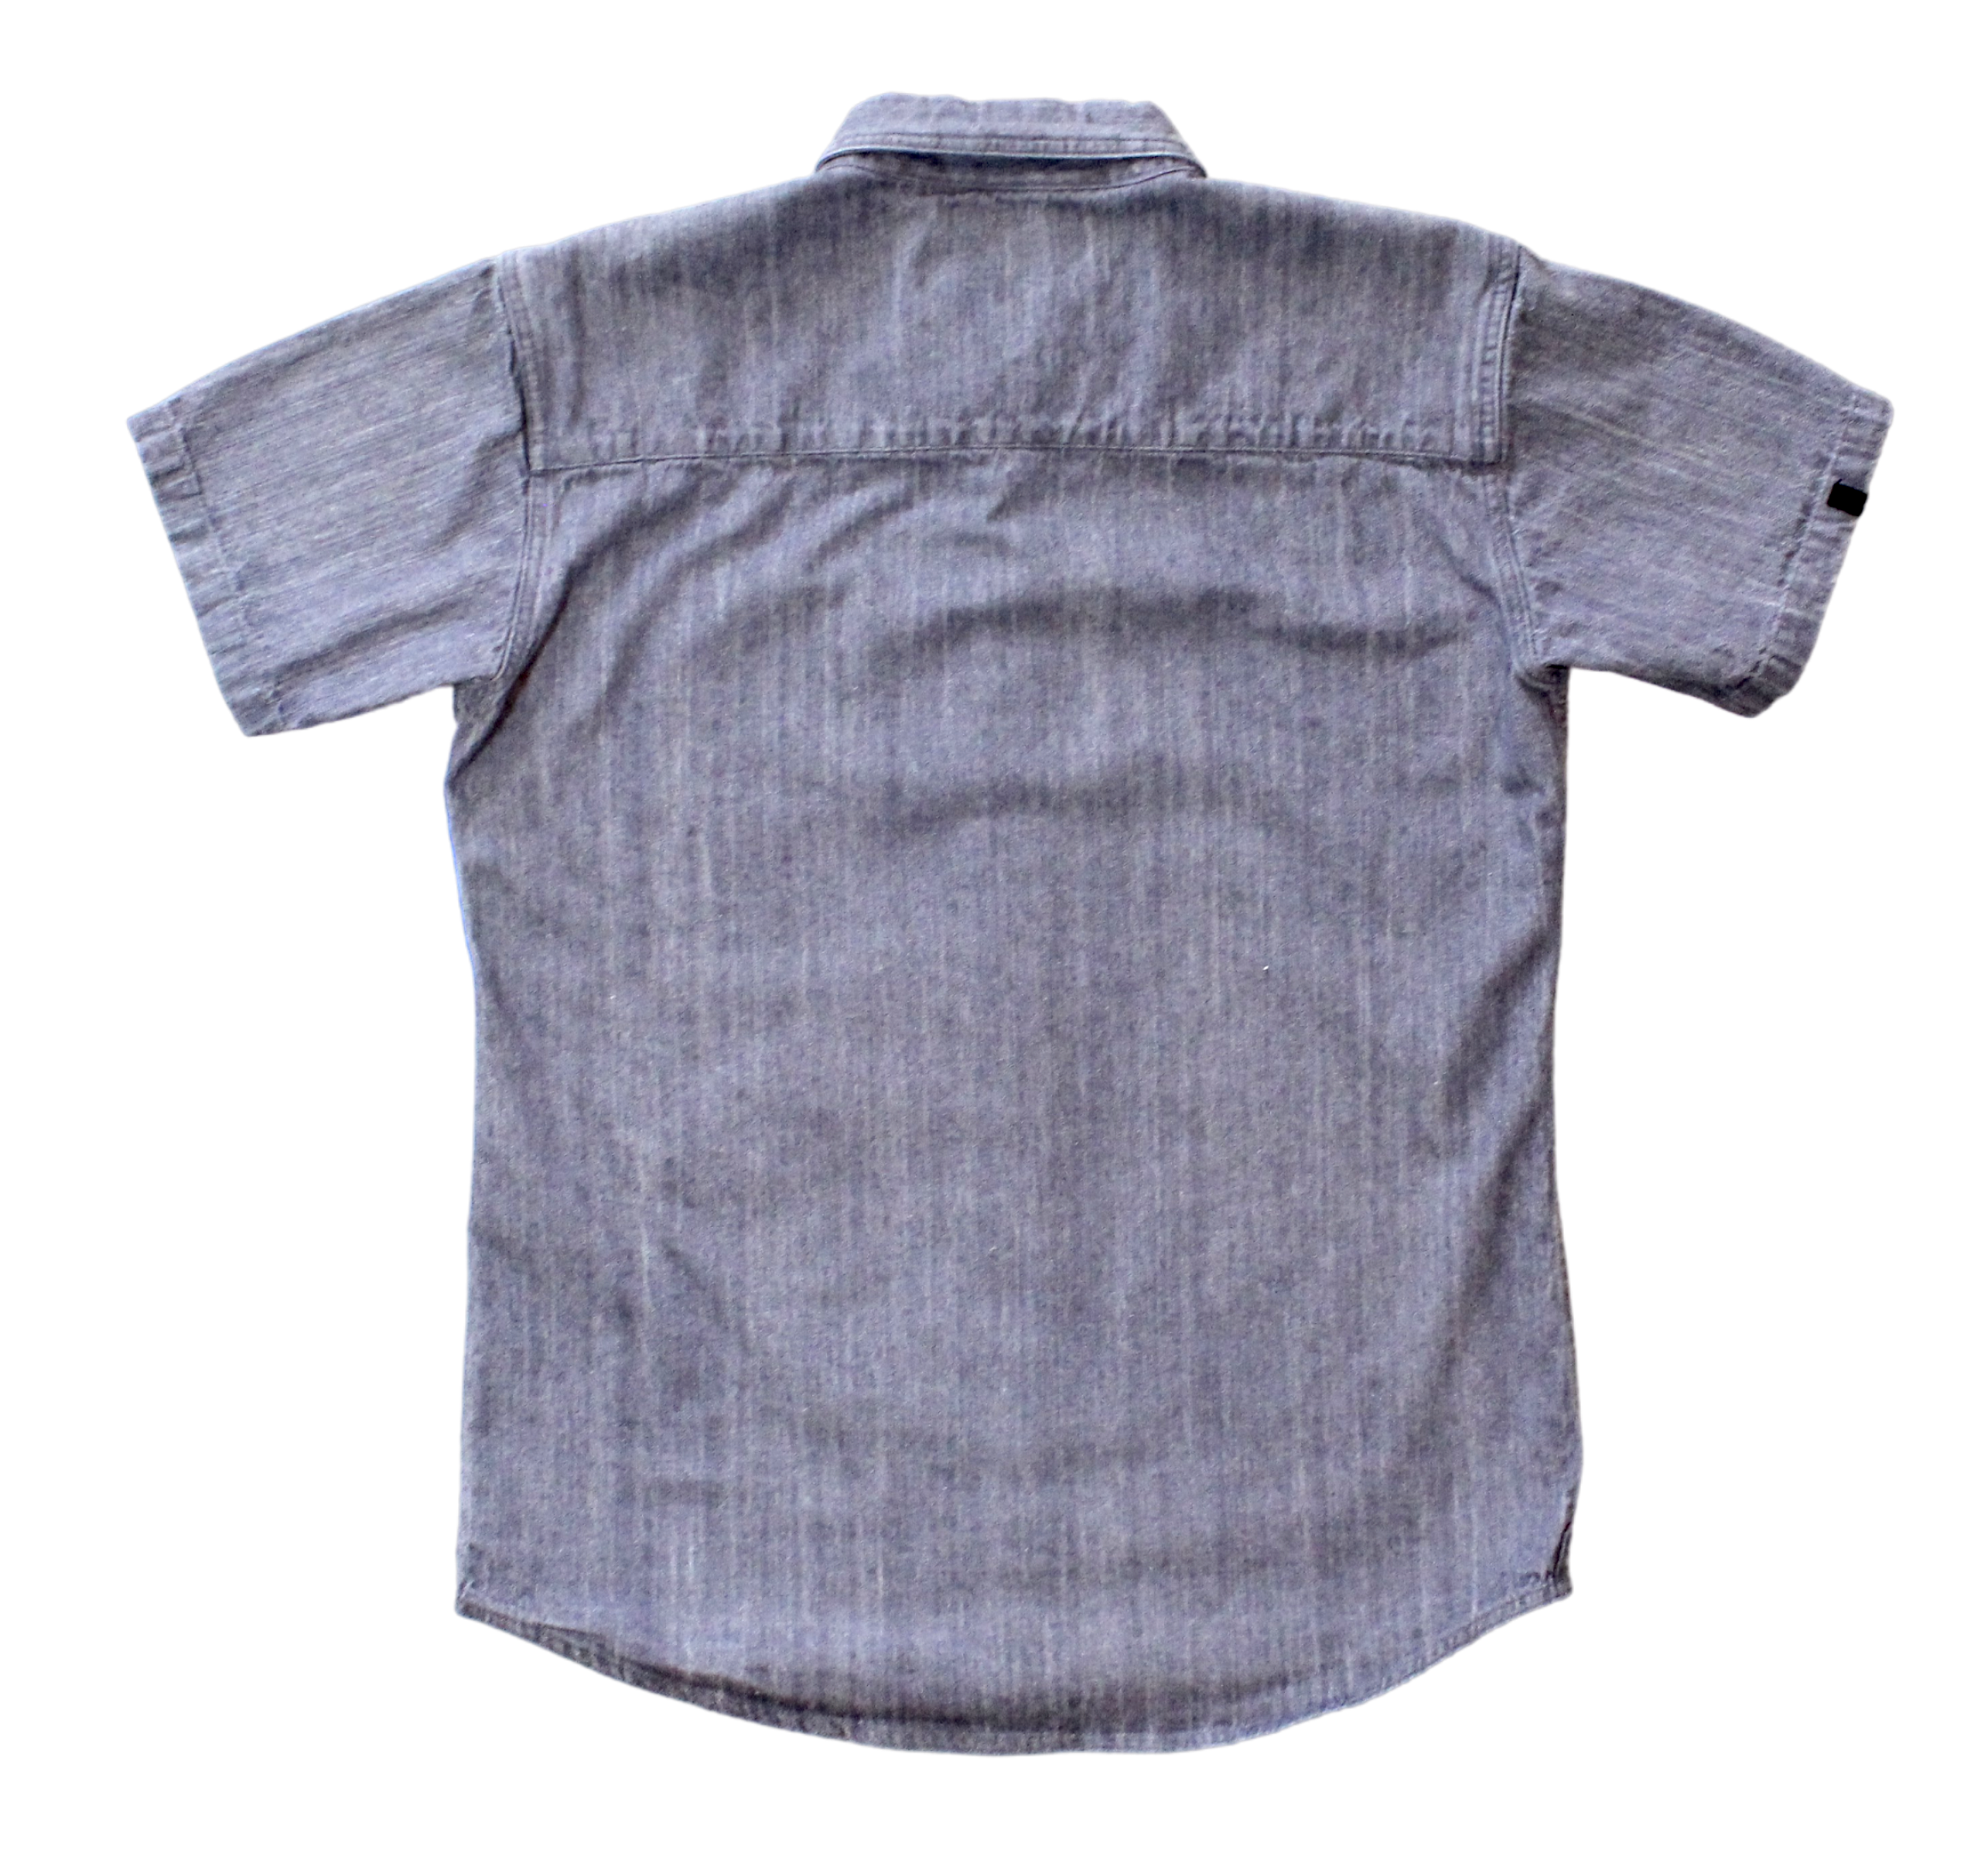 Cameron Boyer's Short Sleeve Shirt